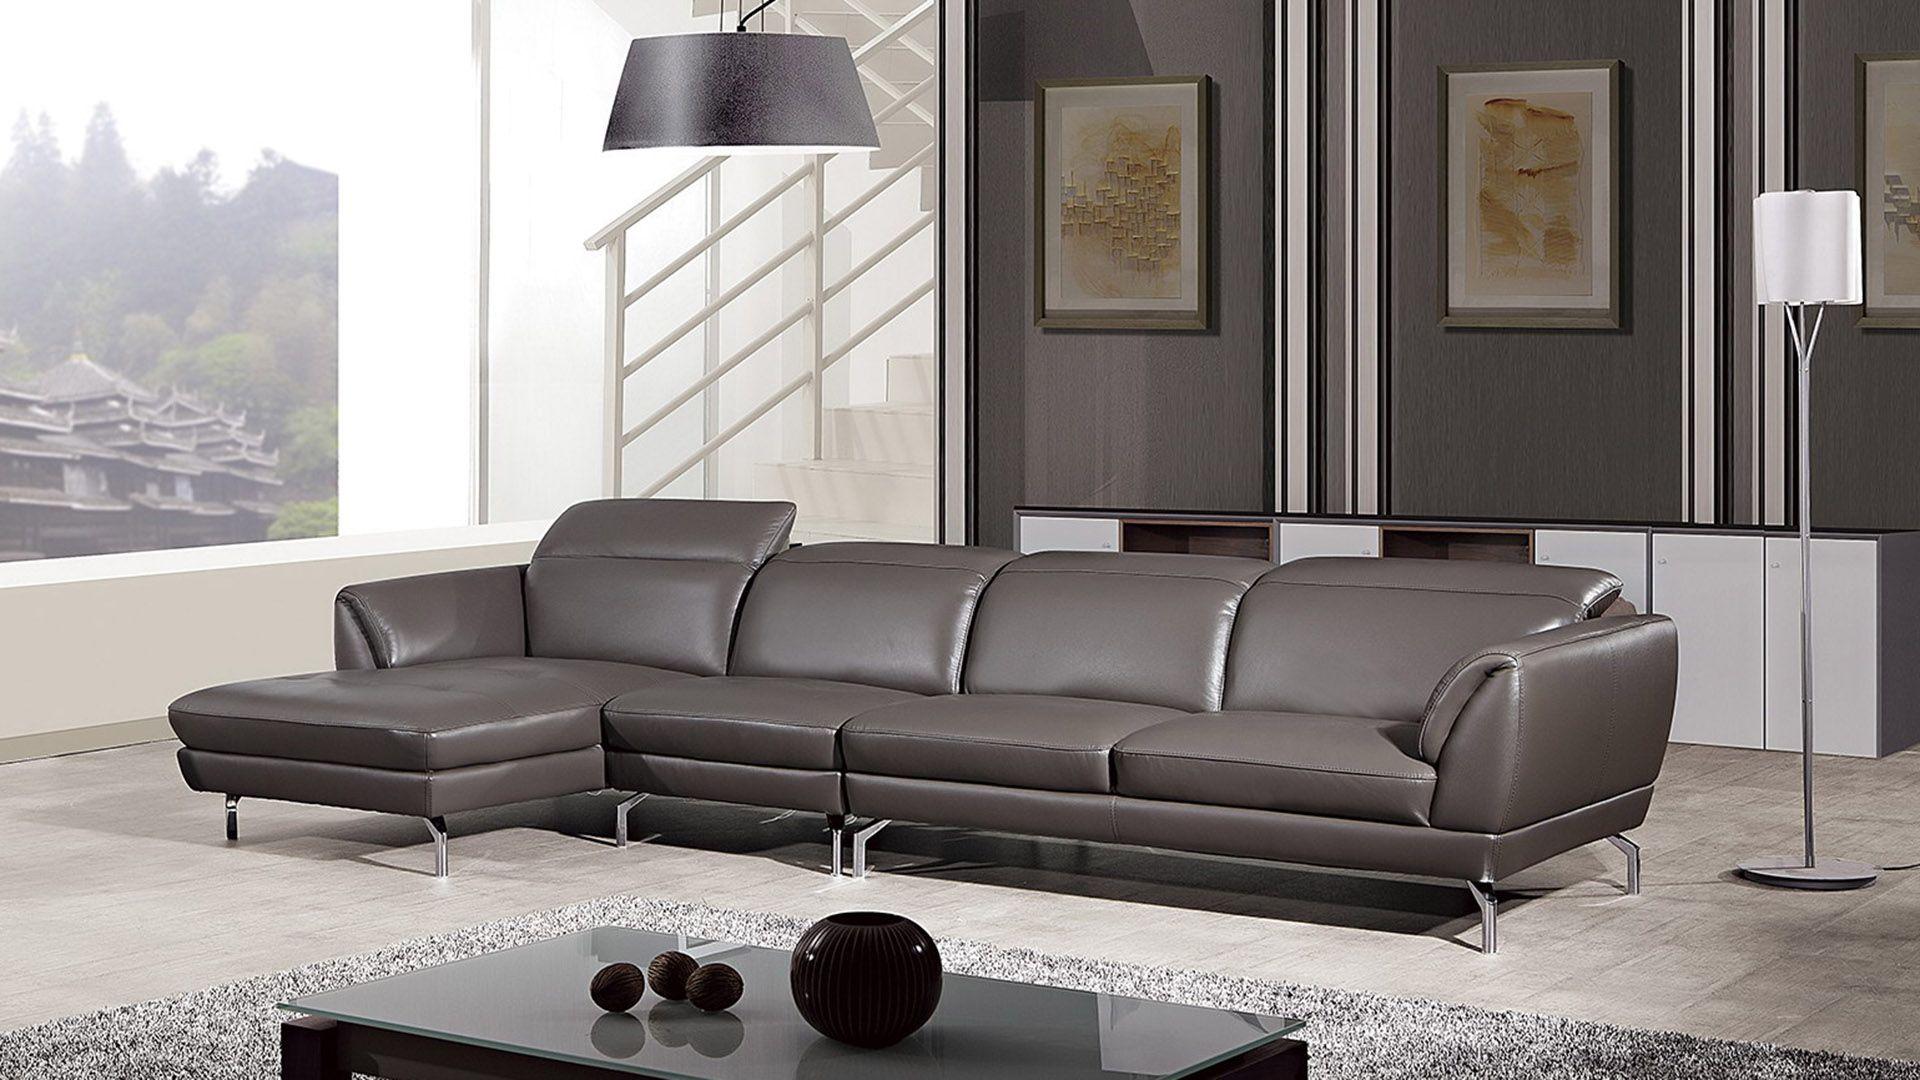 Contemporary, Modern Sectional Sofa EK-L023-TPE EK-L023R-TPE in Taupe Italian Leather